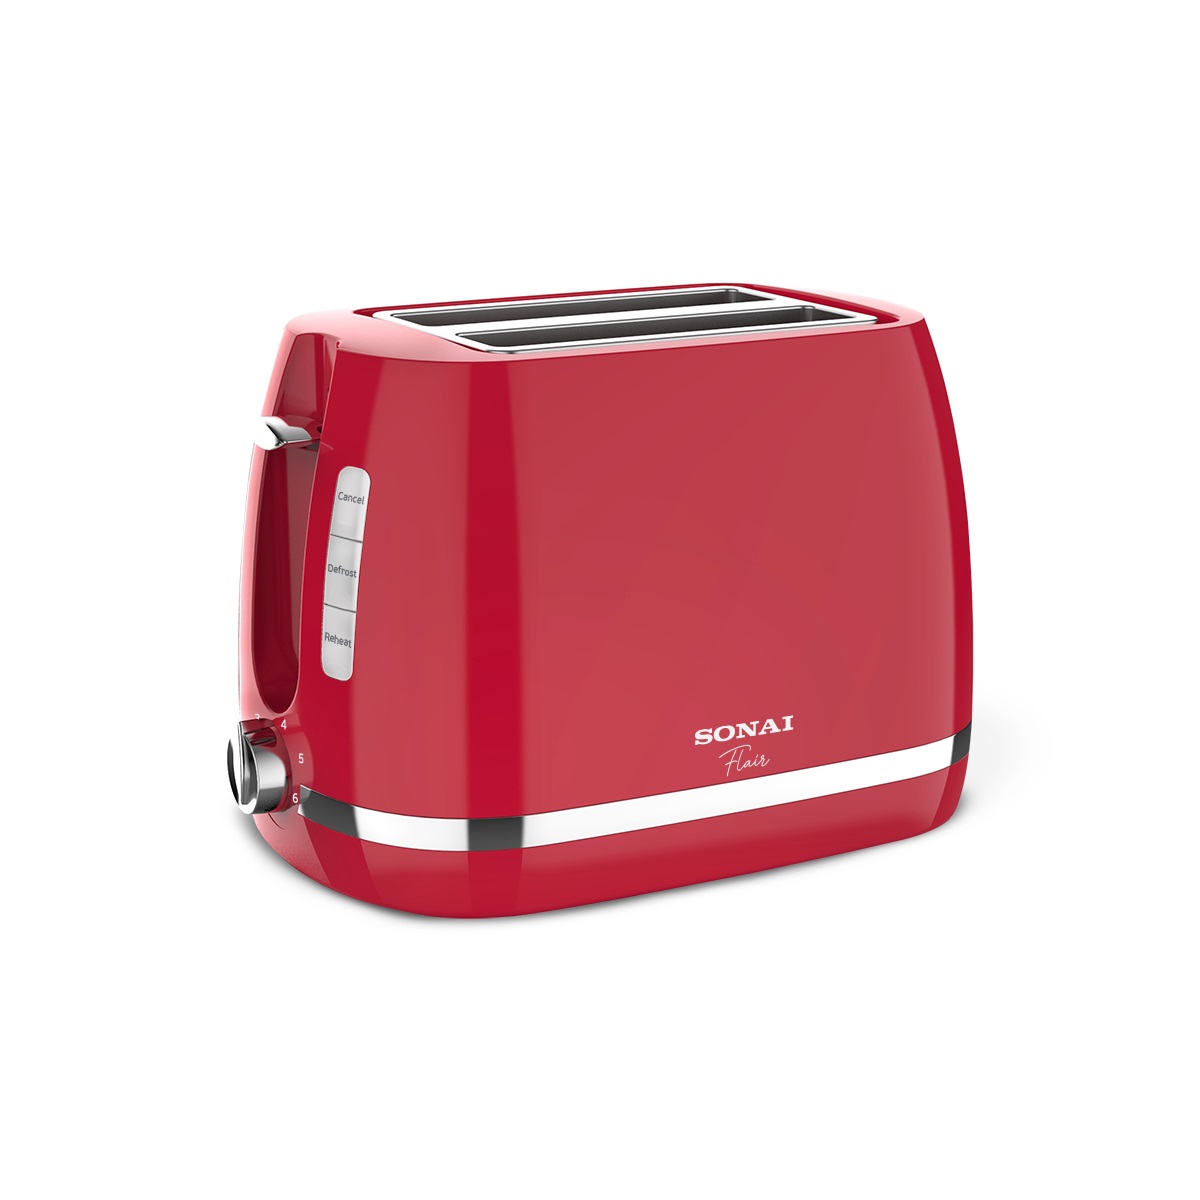 Sonai Flair Toaster, 2 Slices, 870 Watt, Red - SH-1820